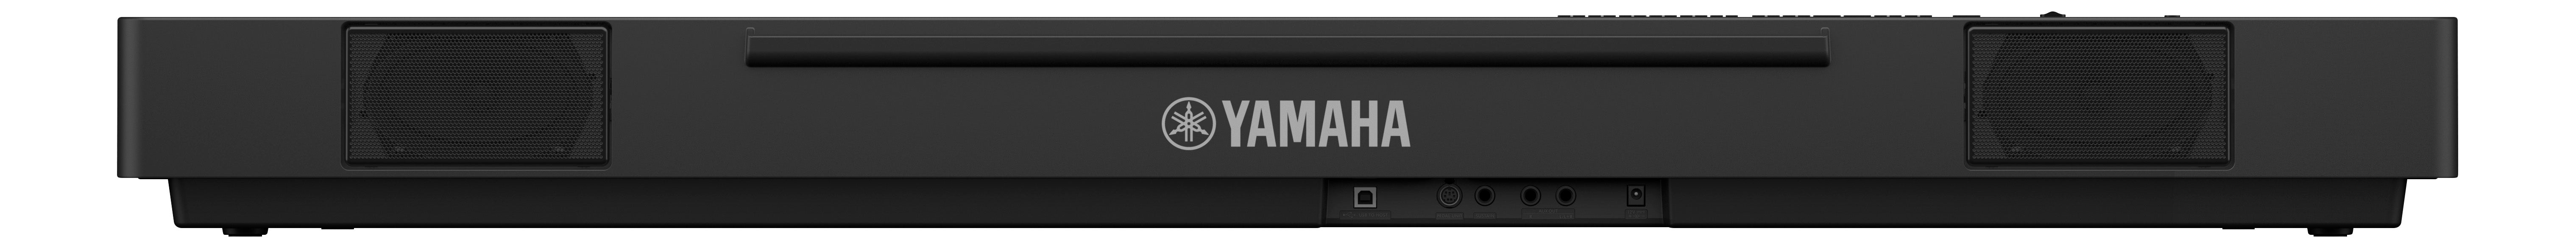 Yamaha P225 B 88-Key Digital Piano - Black